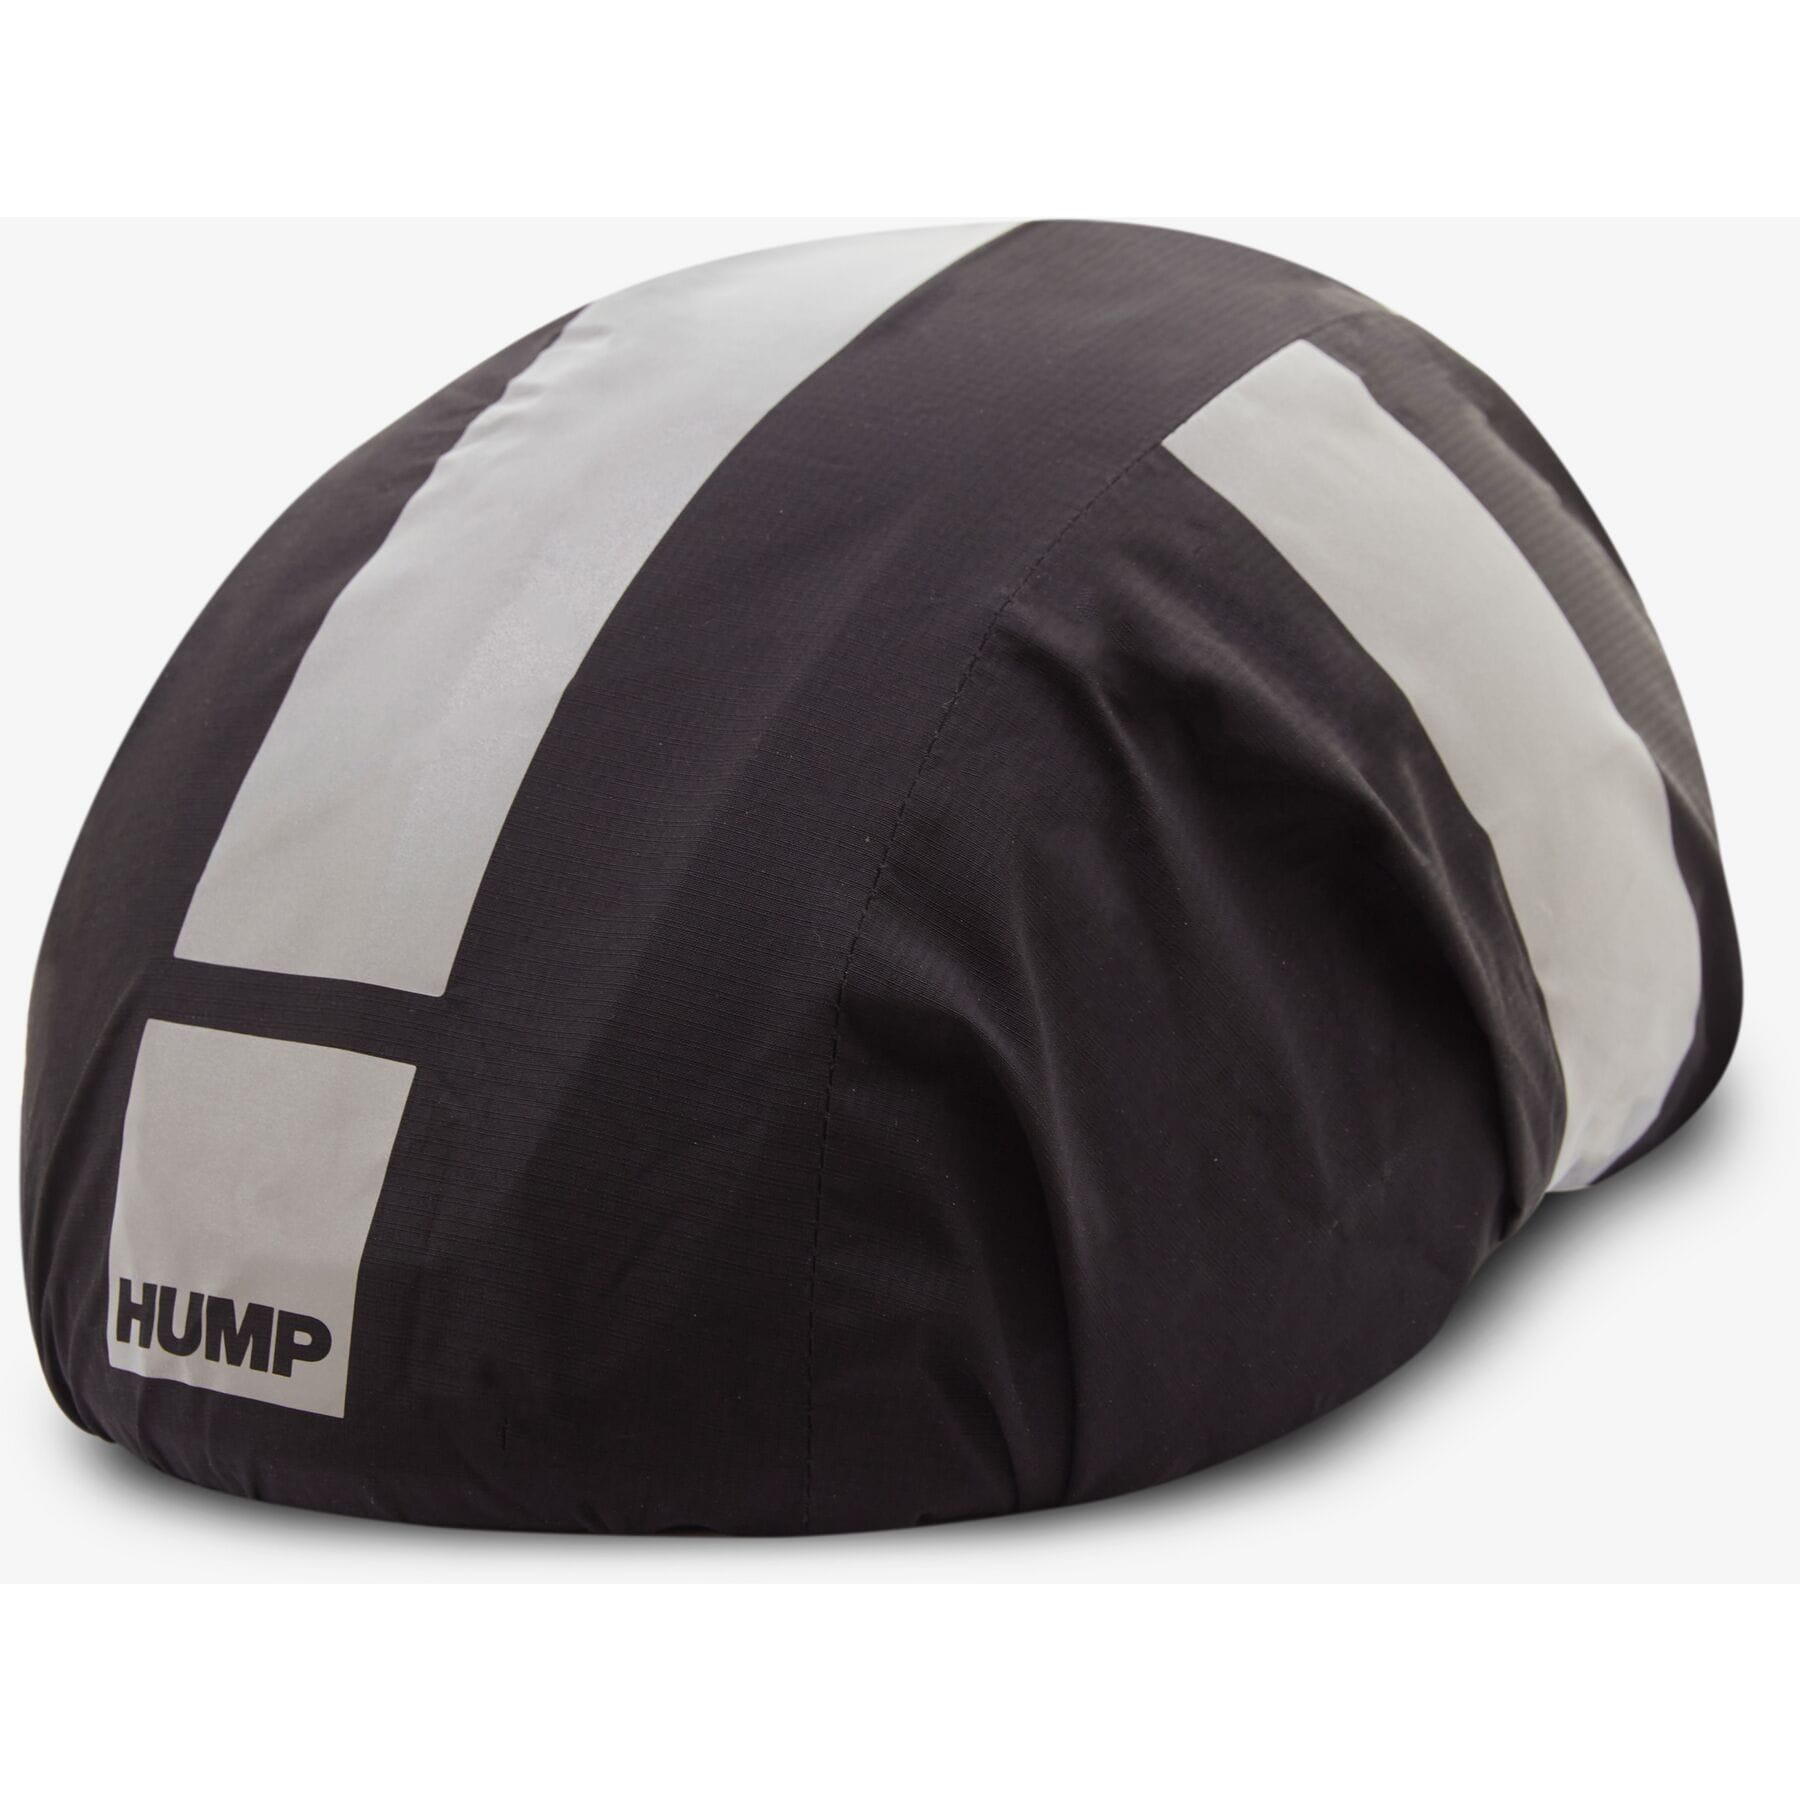 HUMP HUMP Reflective Waterproof Helmet Cover - Black